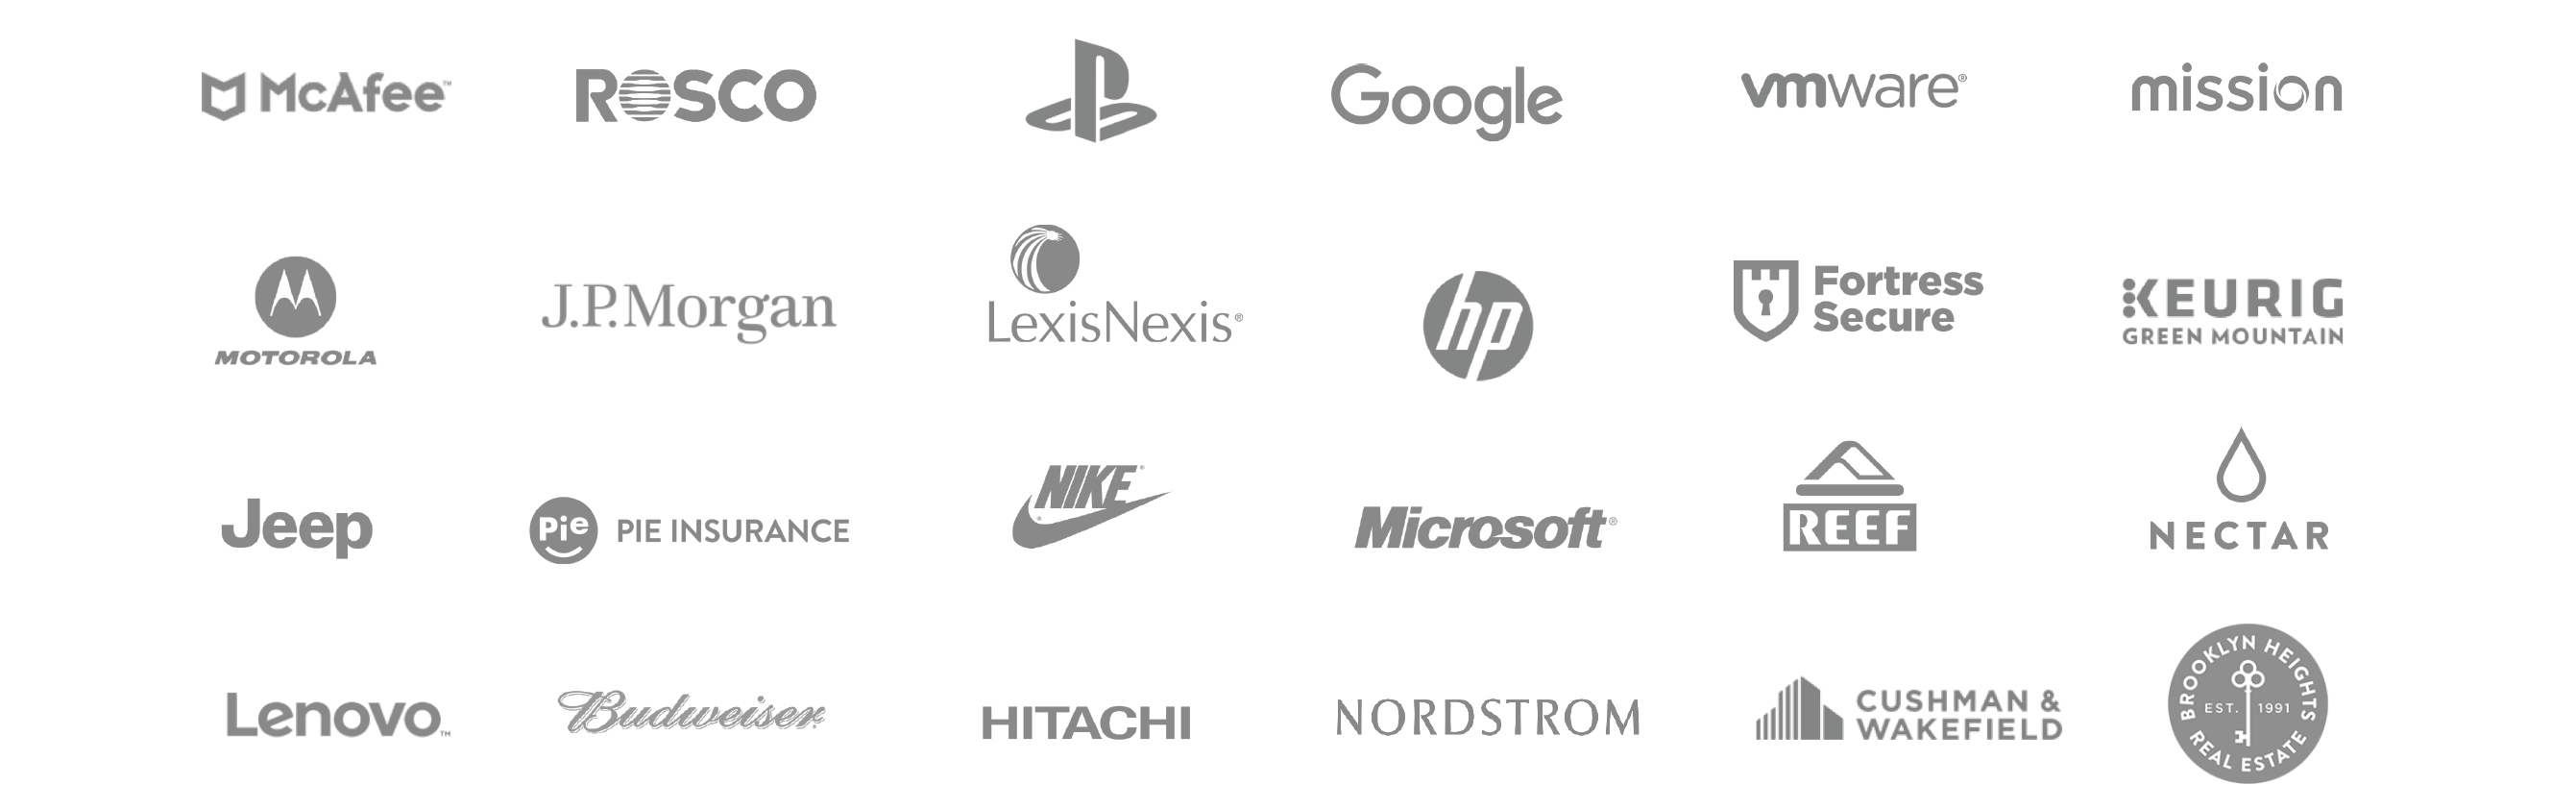 Solid Branding Work Logos